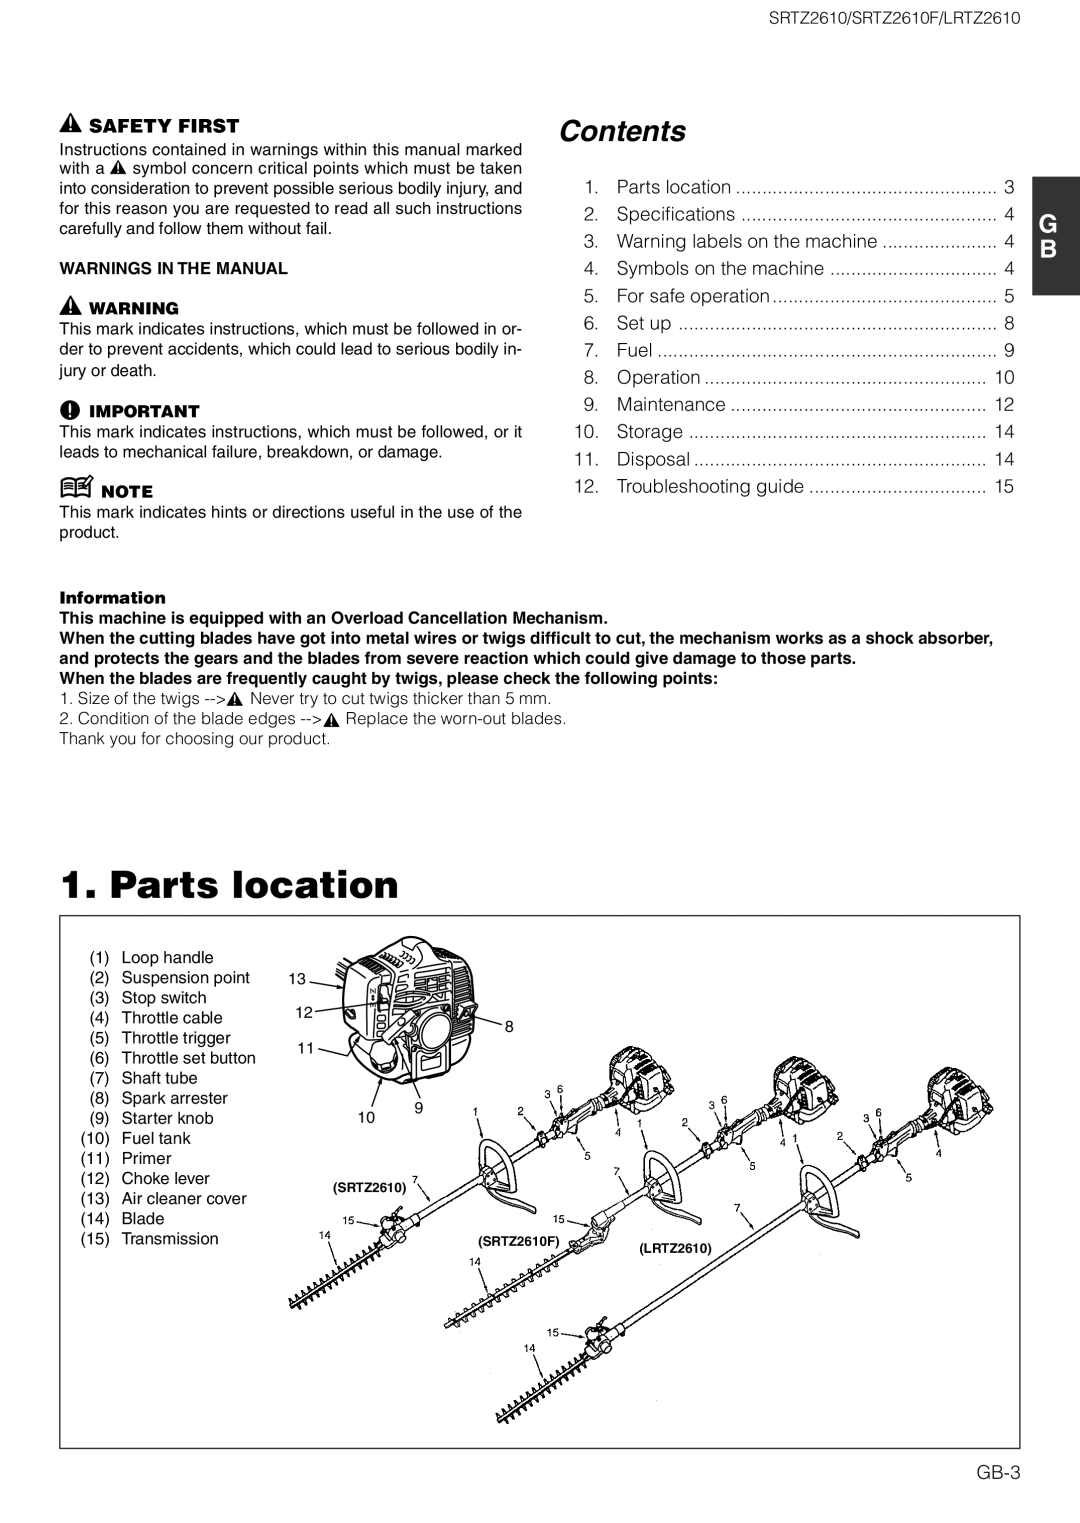 Zenoah SRTZ2610F, LRTZ2610 owner manual Parts location, Safety First, Contents 